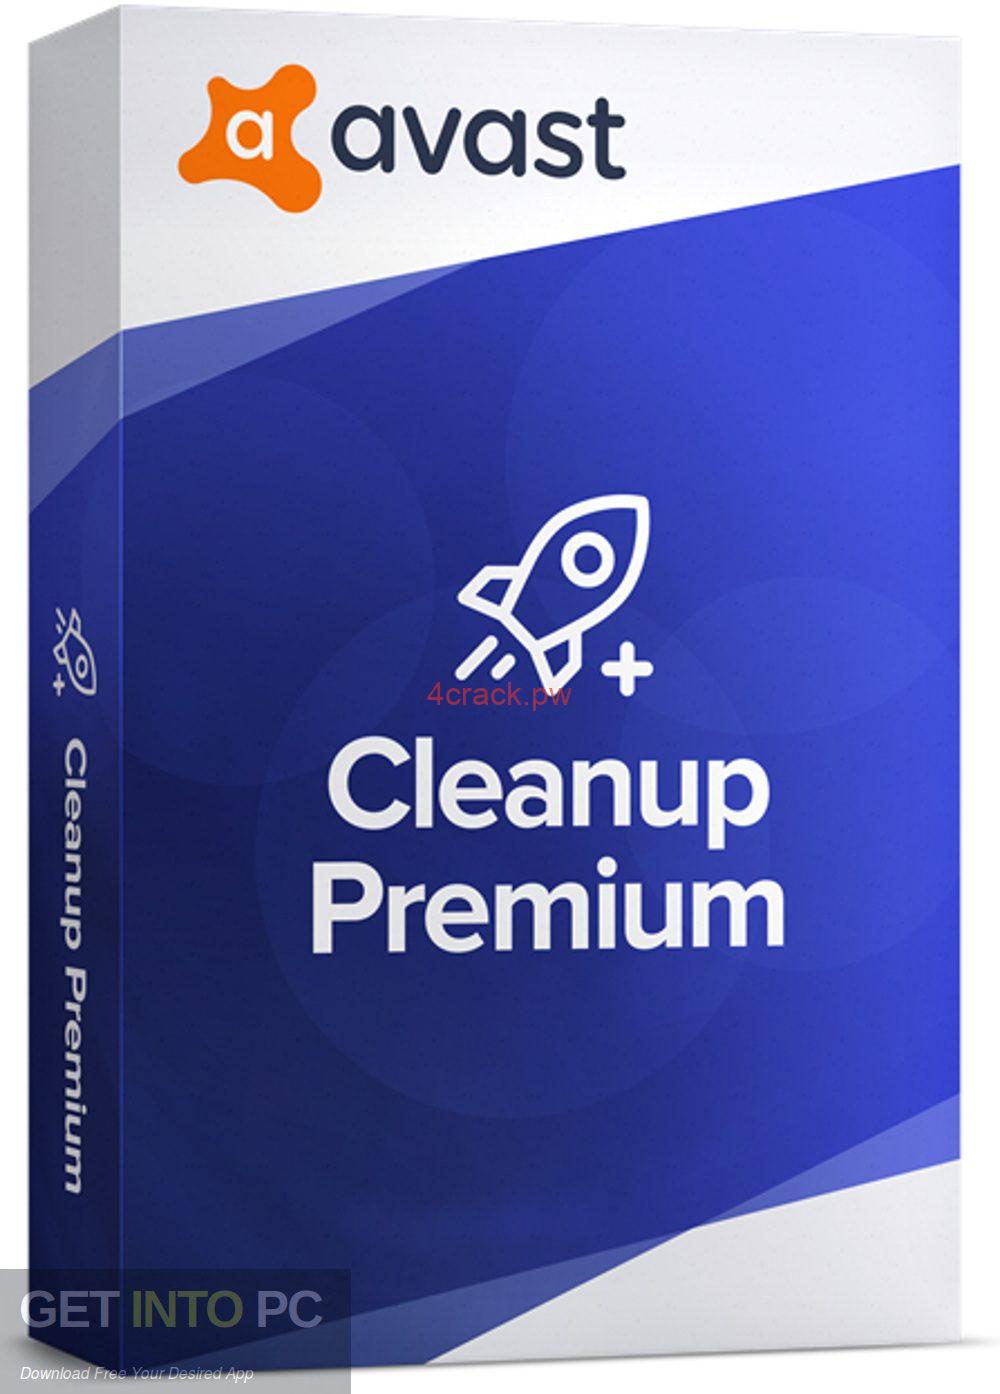 avast-cleanup-premium-2018-free-download-getintopc-com_-7279716